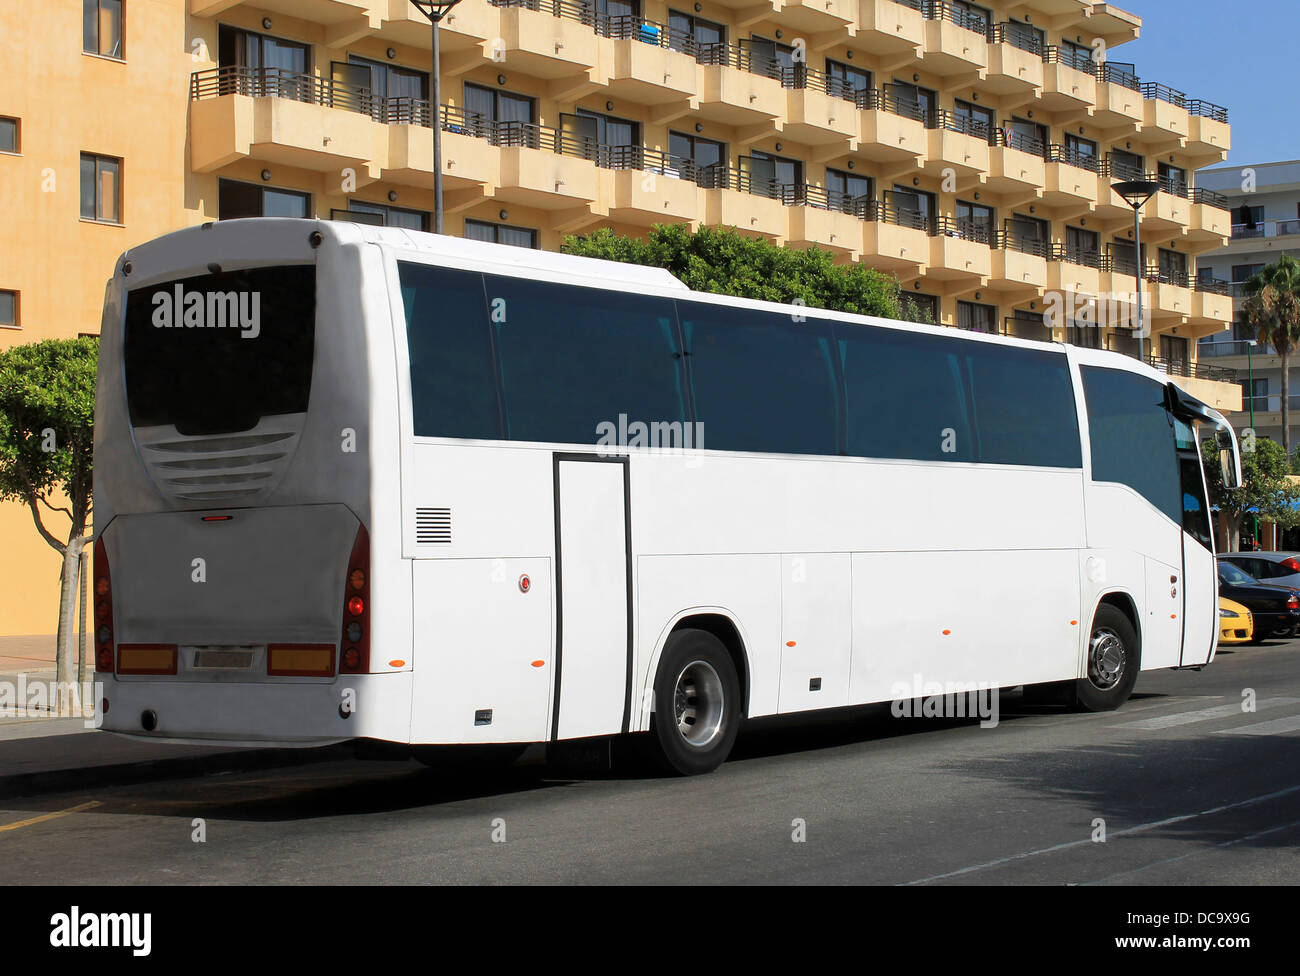 Tourist bus outside hotel on island of Majorca, Spain. Stock Photo